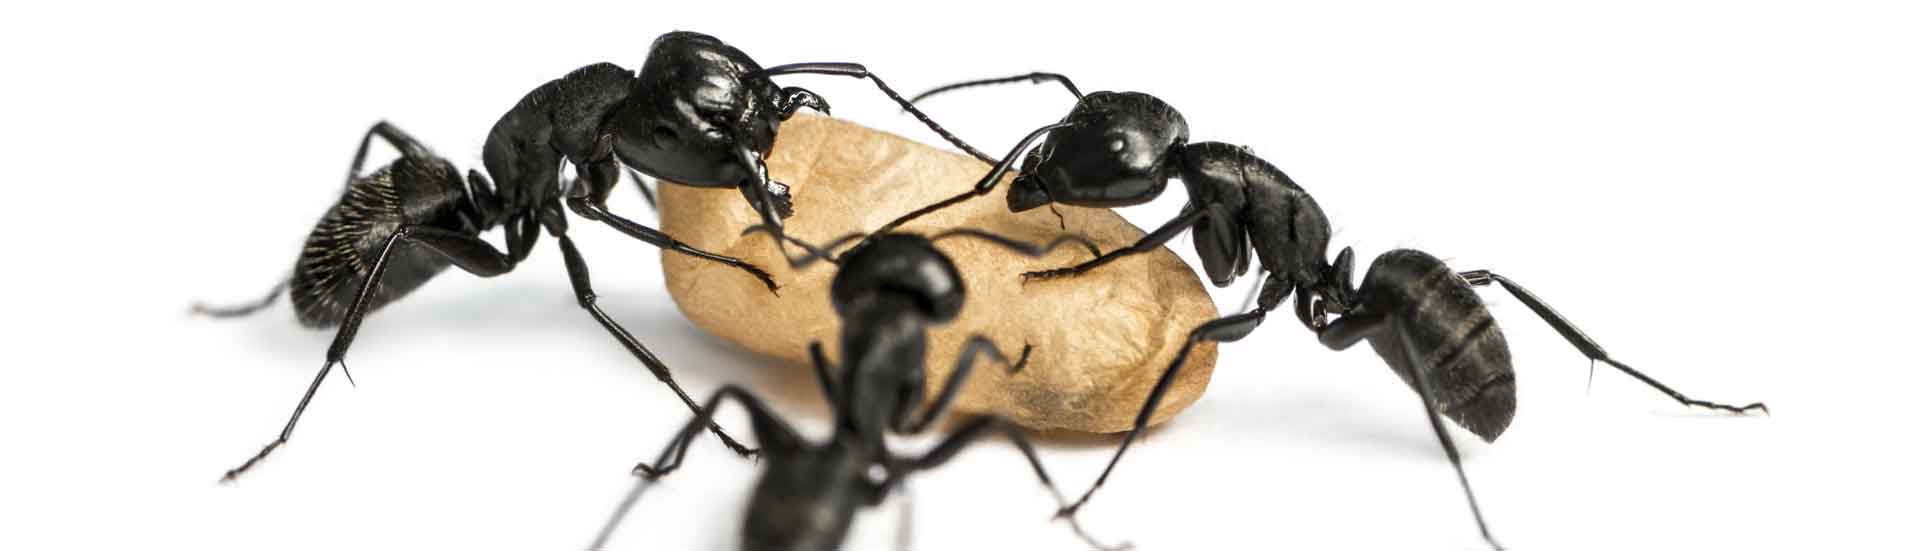 Evans Pest Control Exterminates Ants